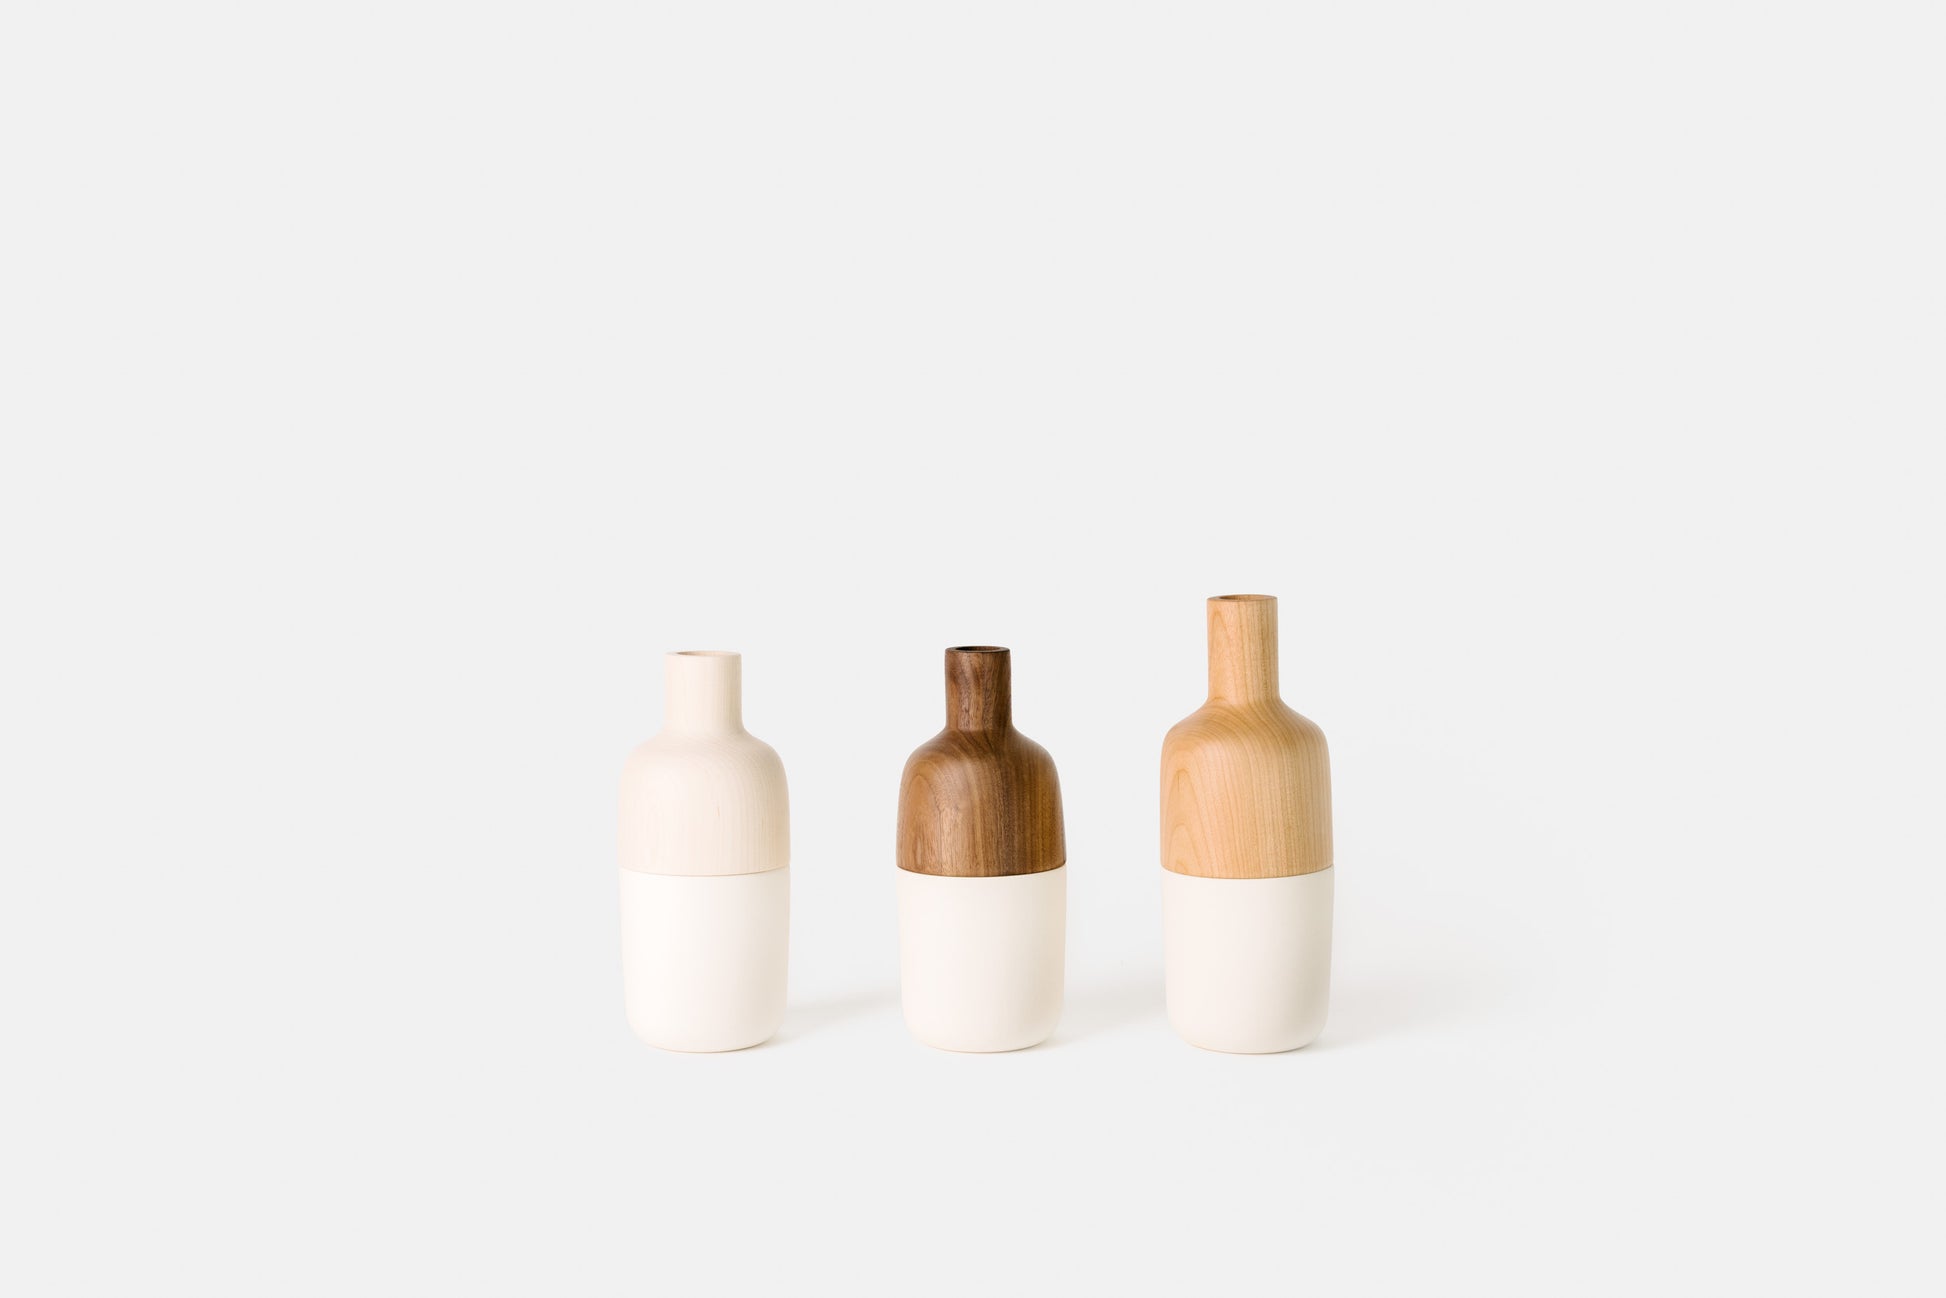 Hardwood and white ceramic marais vases by Melanie Abrantes Designs.